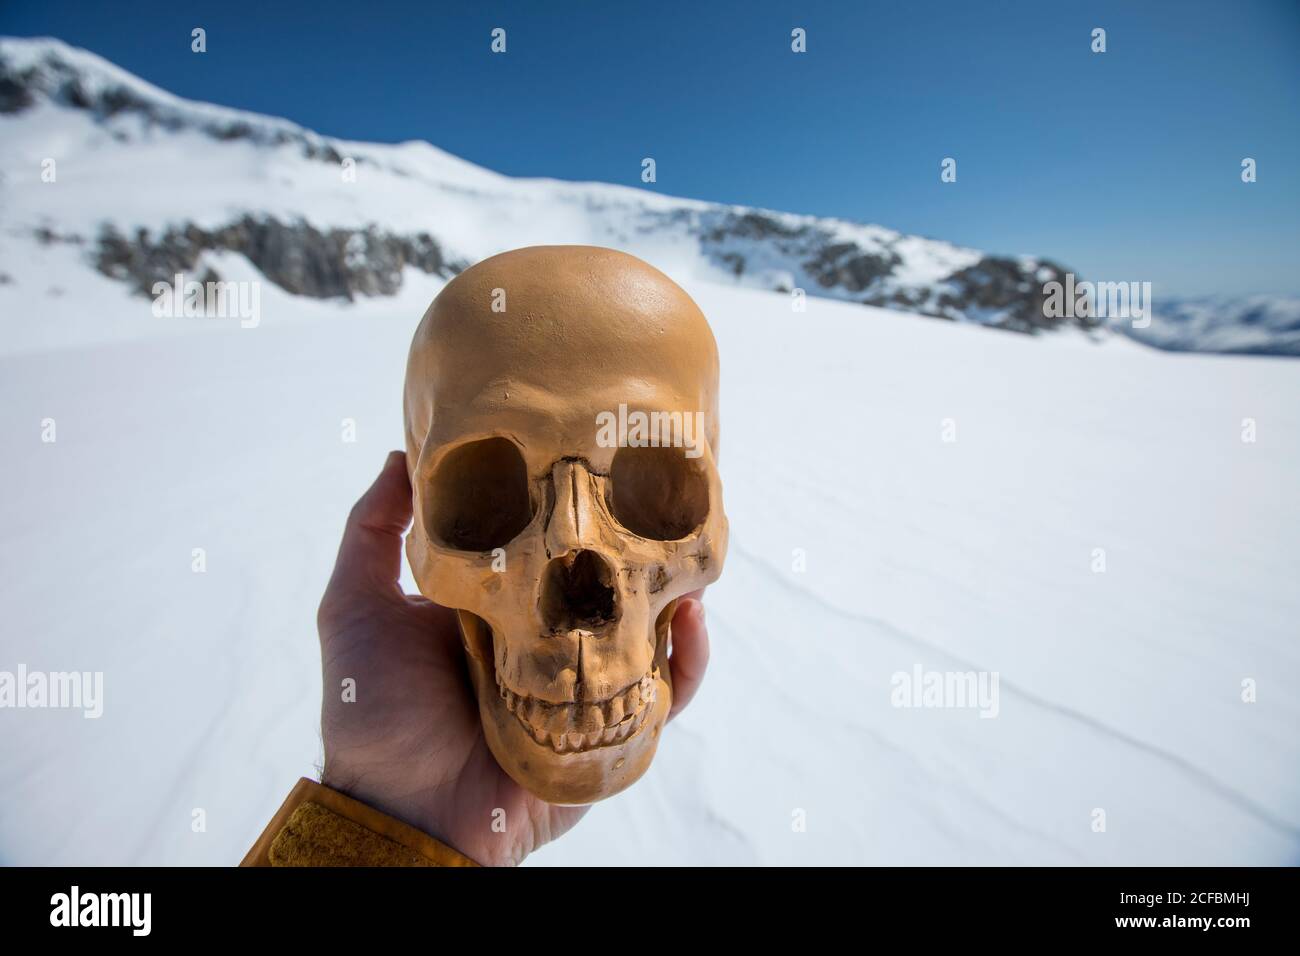 Man holds human skull, artifact in winter landscape. Stock Photo